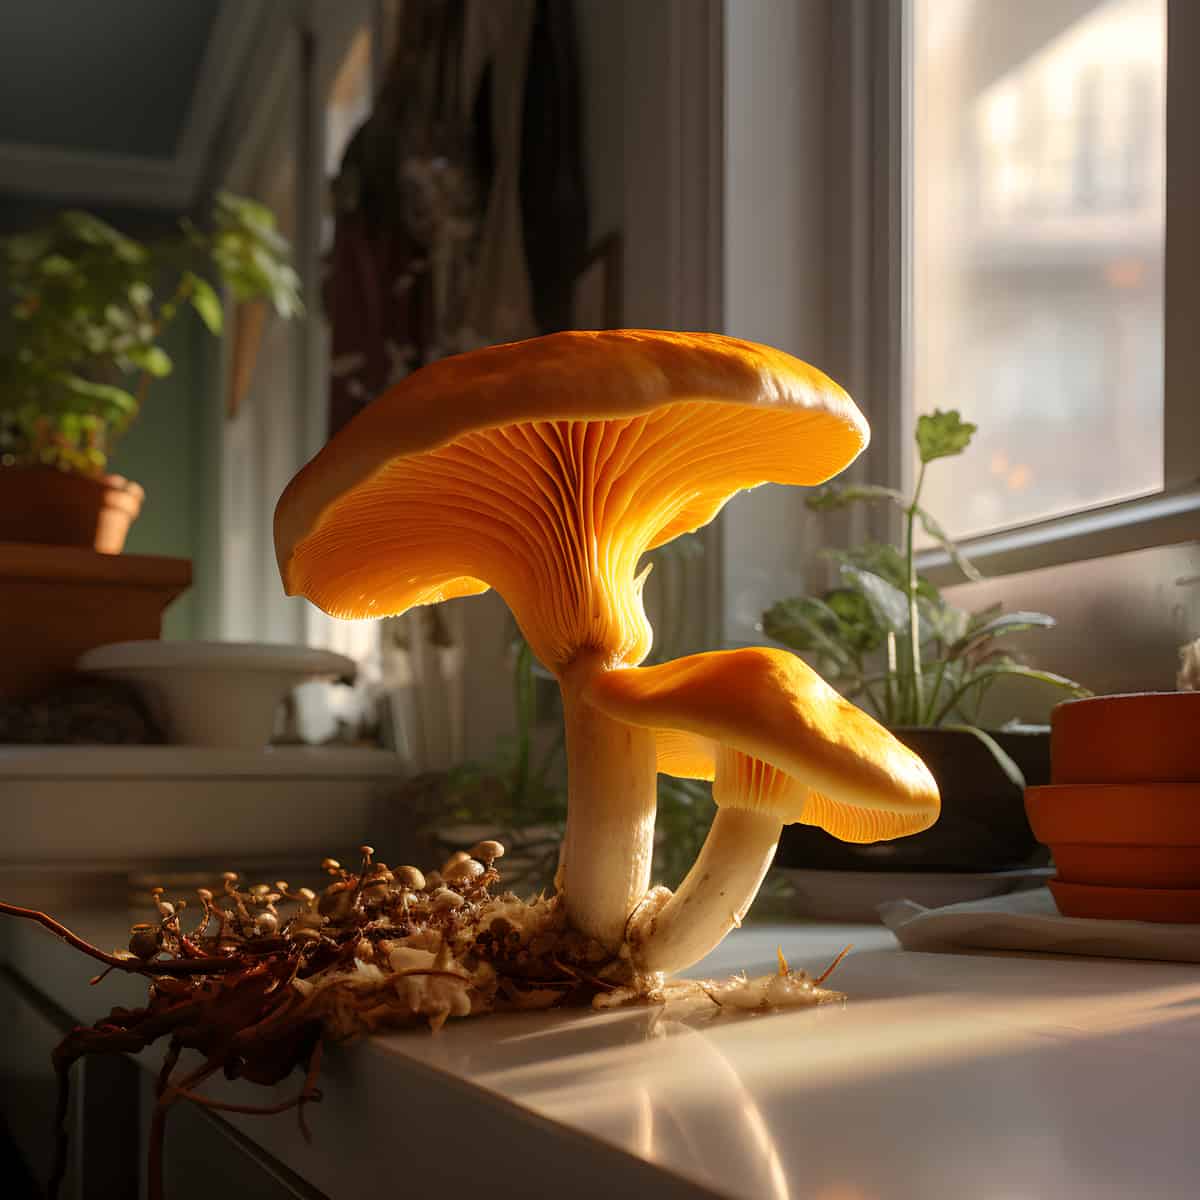 Saffron Milk Cap Mushrooms on a kitchen counter